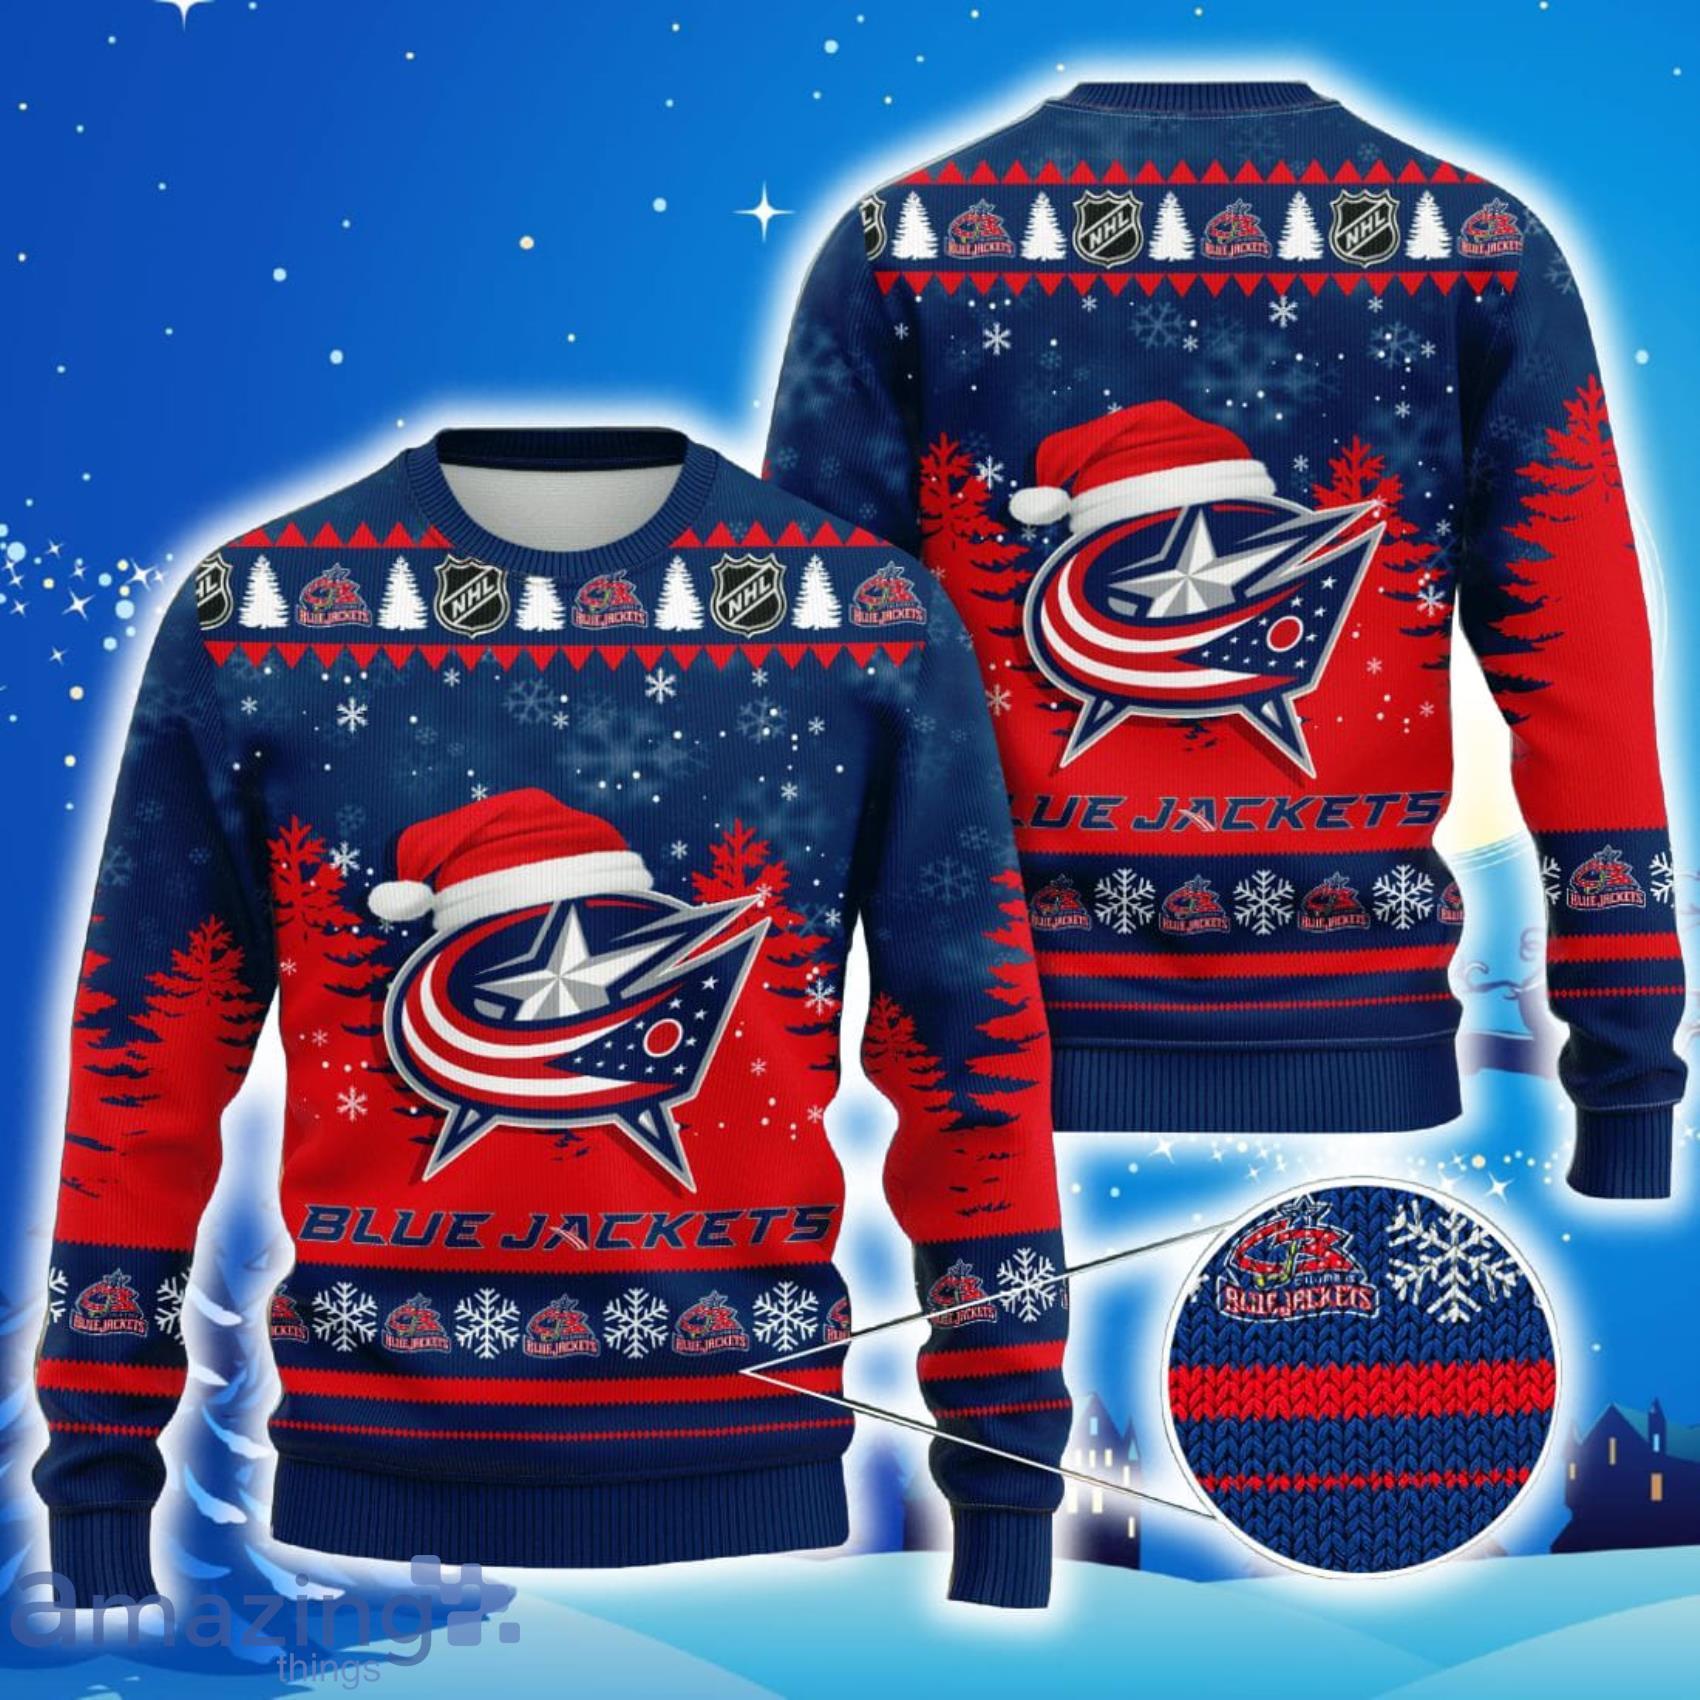 Columbus Blue Jackets Grateful Dead Ugly Christmas Fleece Sweater -  Freedomdesign